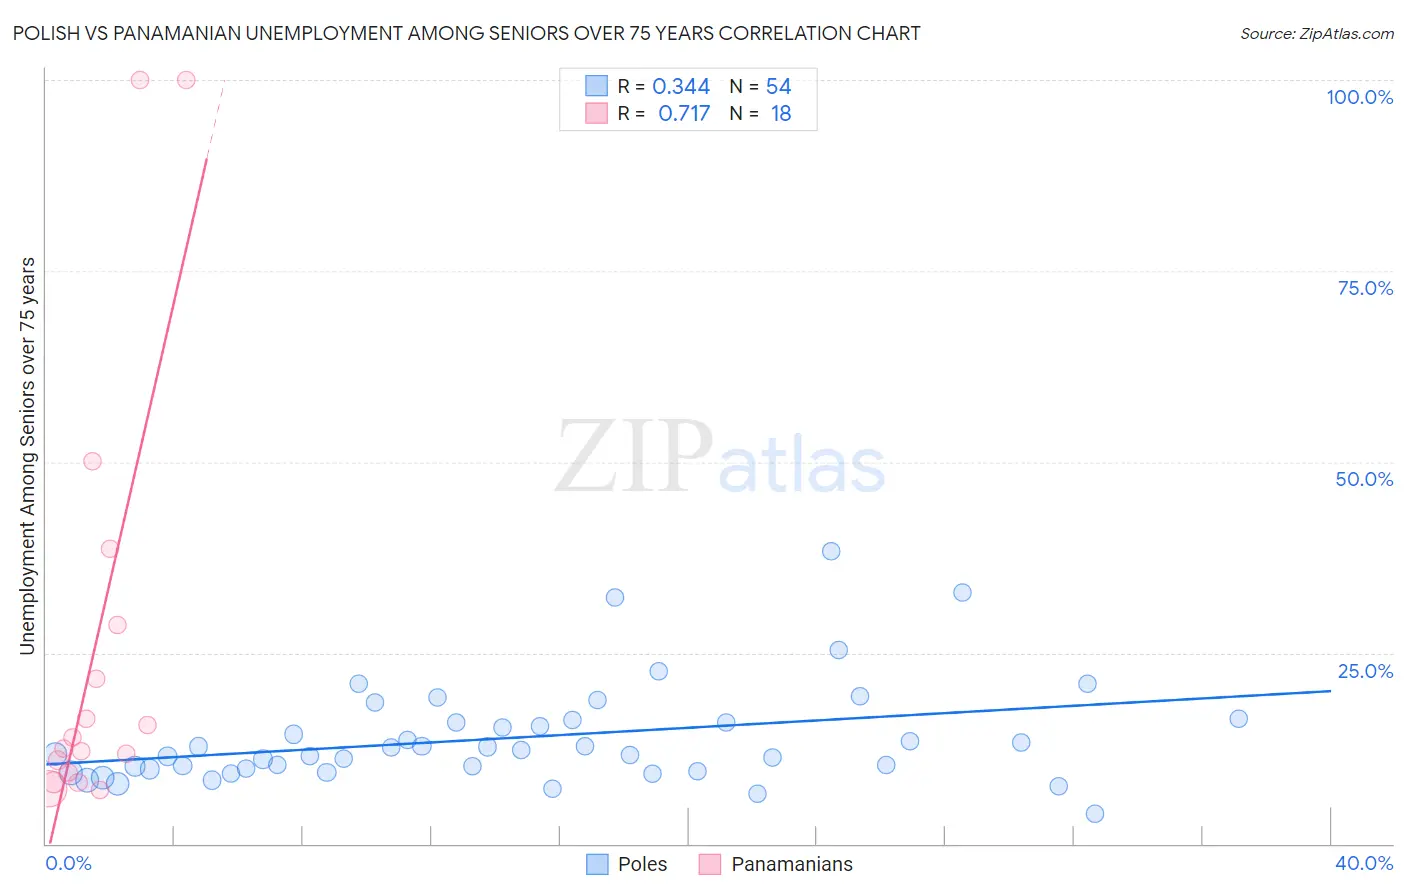 Polish vs Panamanian Unemployment Among Seniors over 75 years